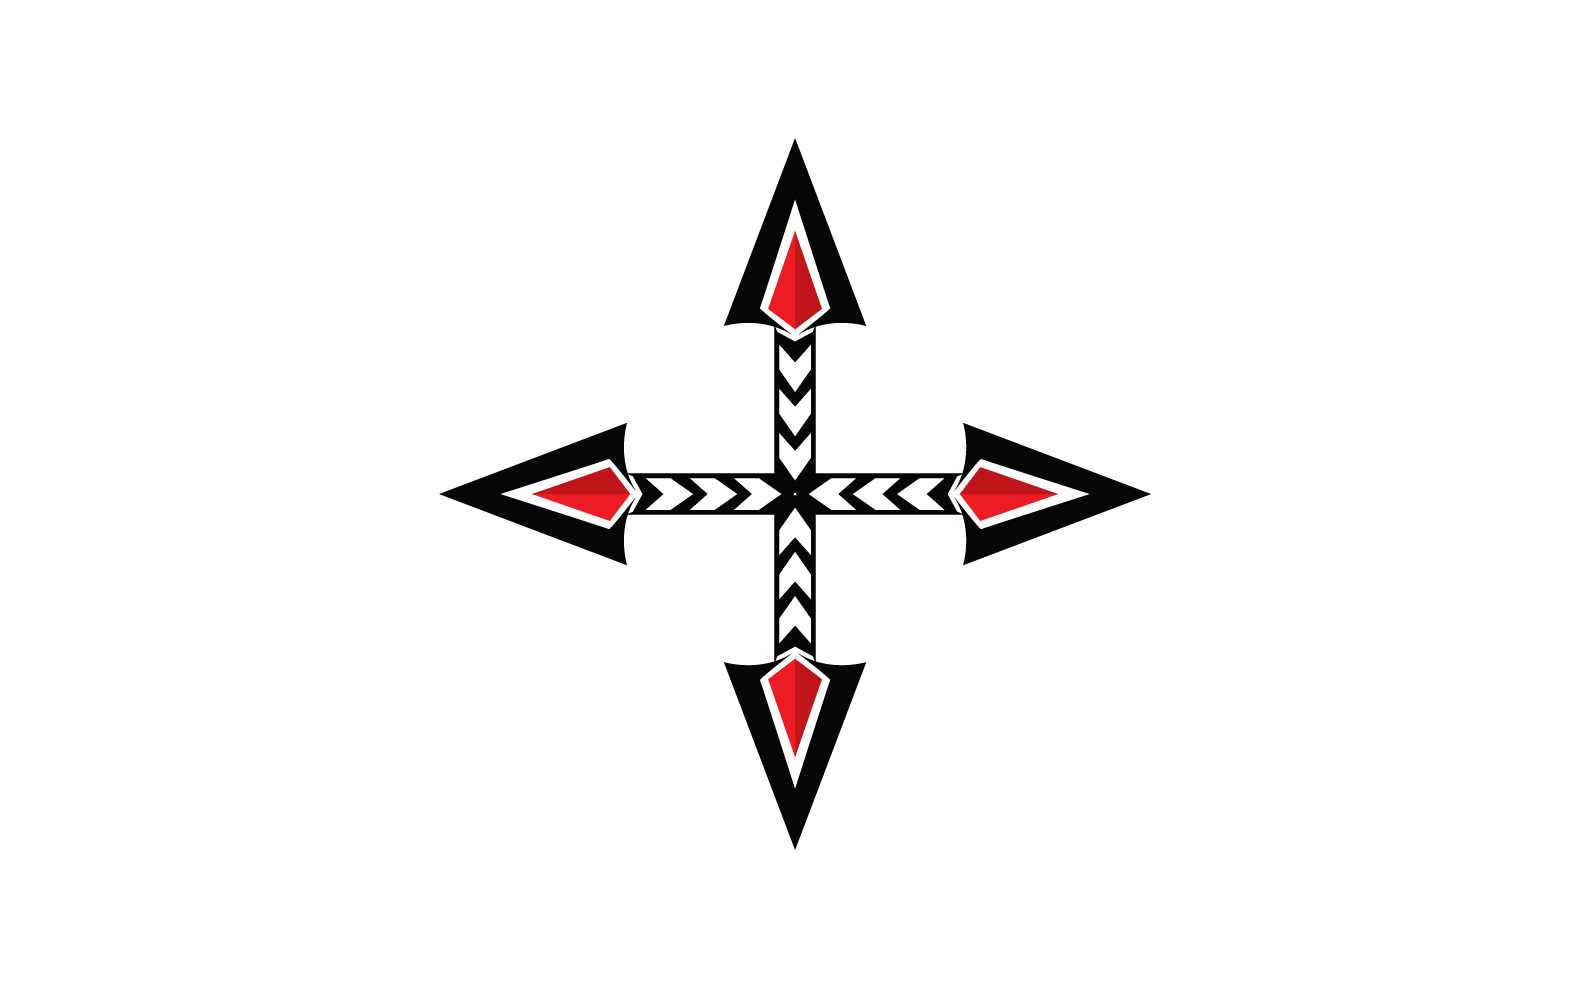 Spear  logo  for element design design vector v60